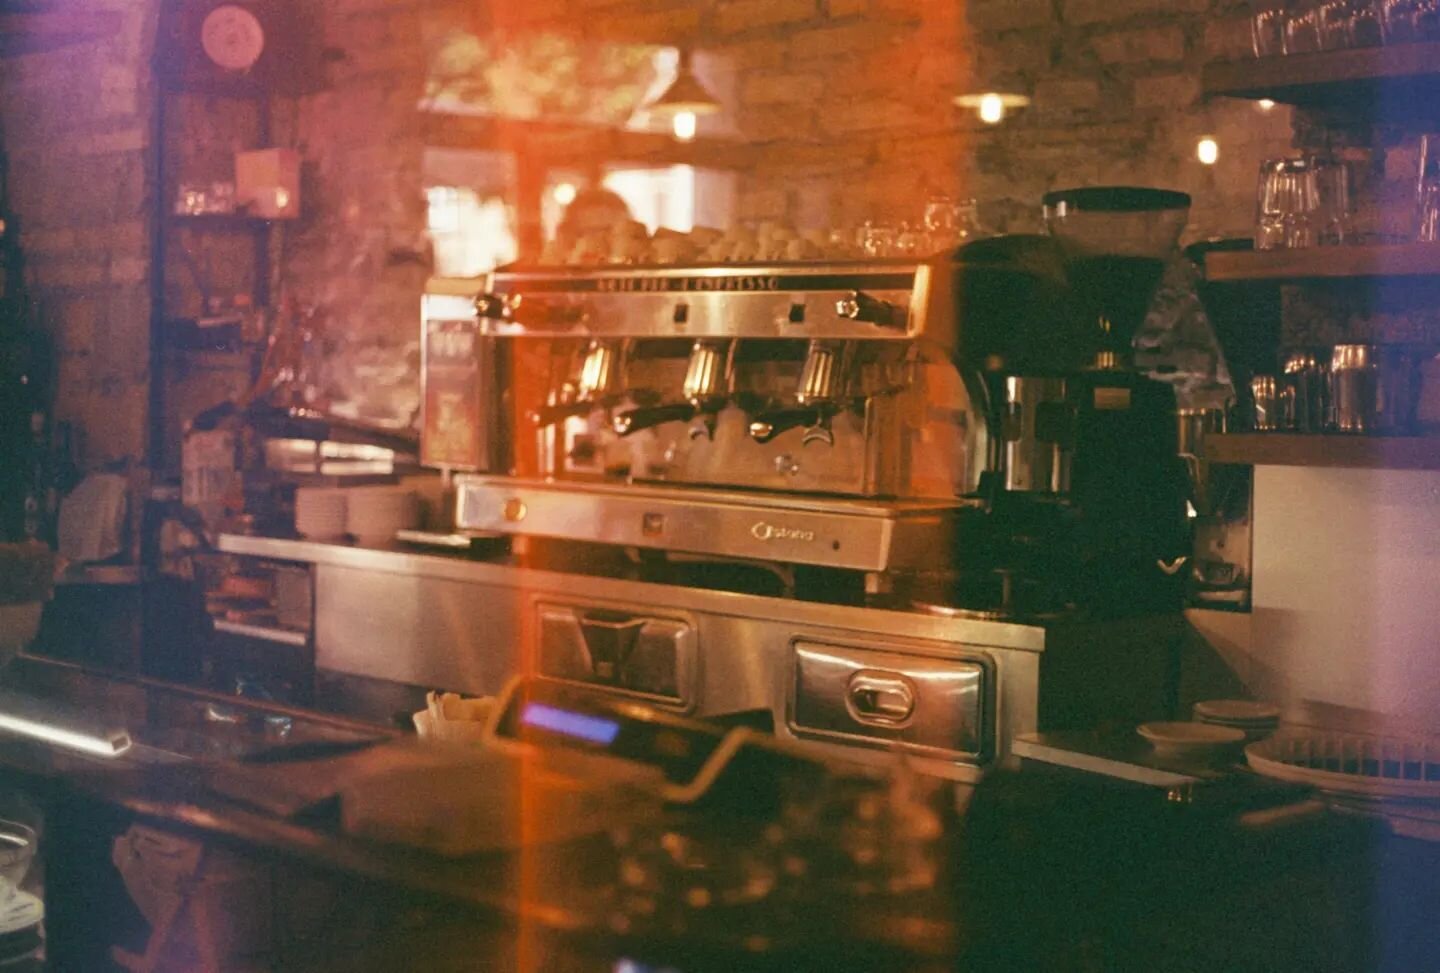 Italian coffee shop on expired film
.
.
.
.
.
.
.
.
.
#photooftheday #photographer #photography #travelphotography #travelgram #travel #canonphotography #canon #canonae1 #rome #italy #natgeoyourshot #natgeotravel #coffee #coffee shop